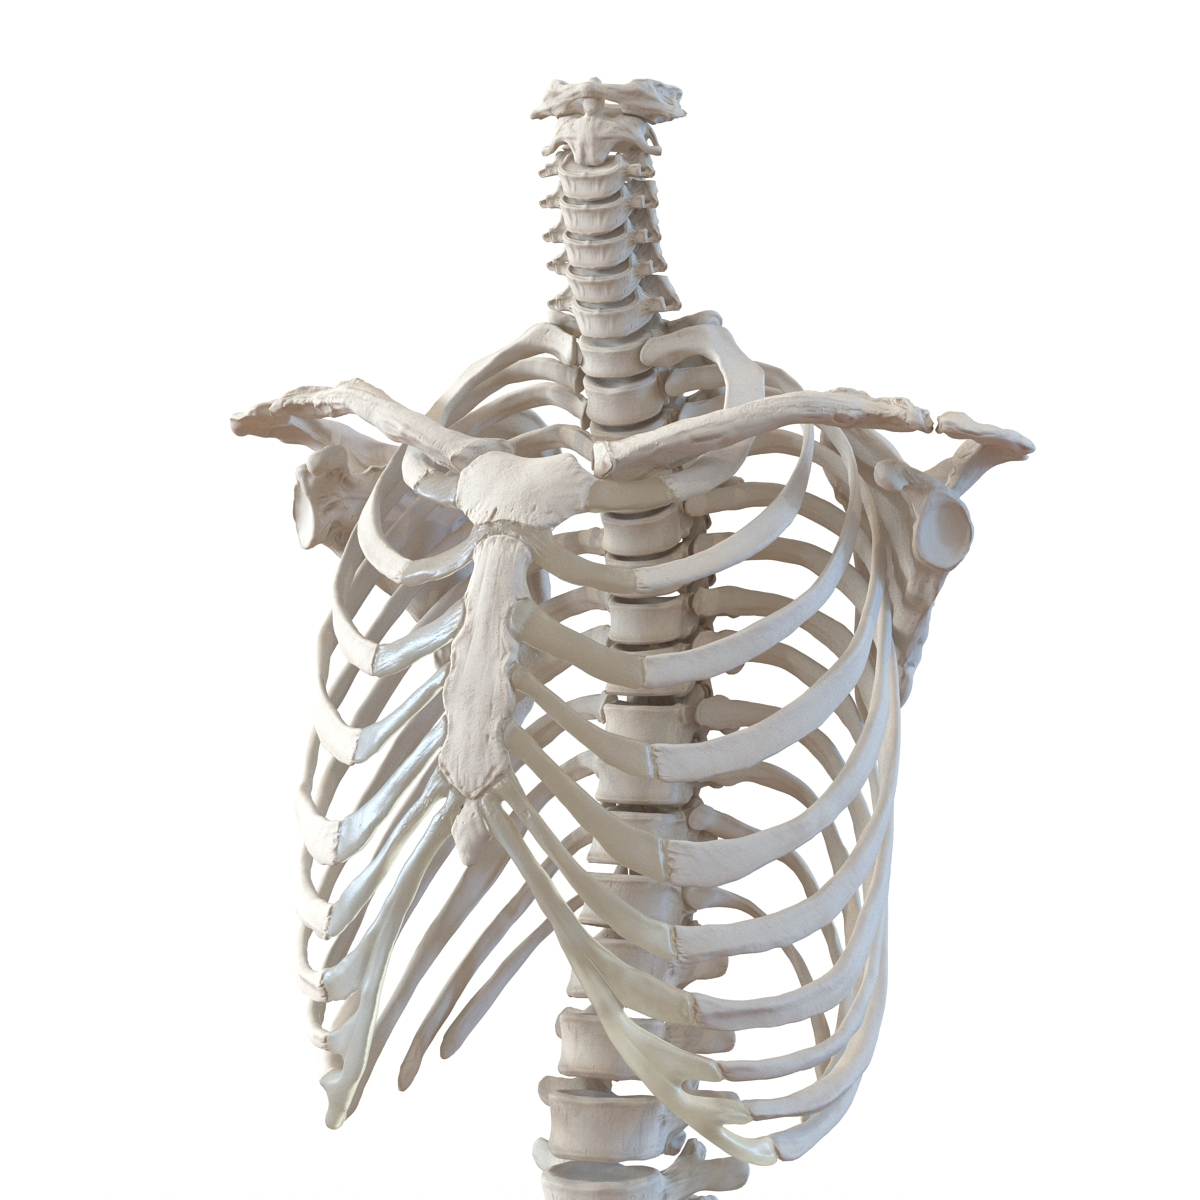 3d model male torso skeleton